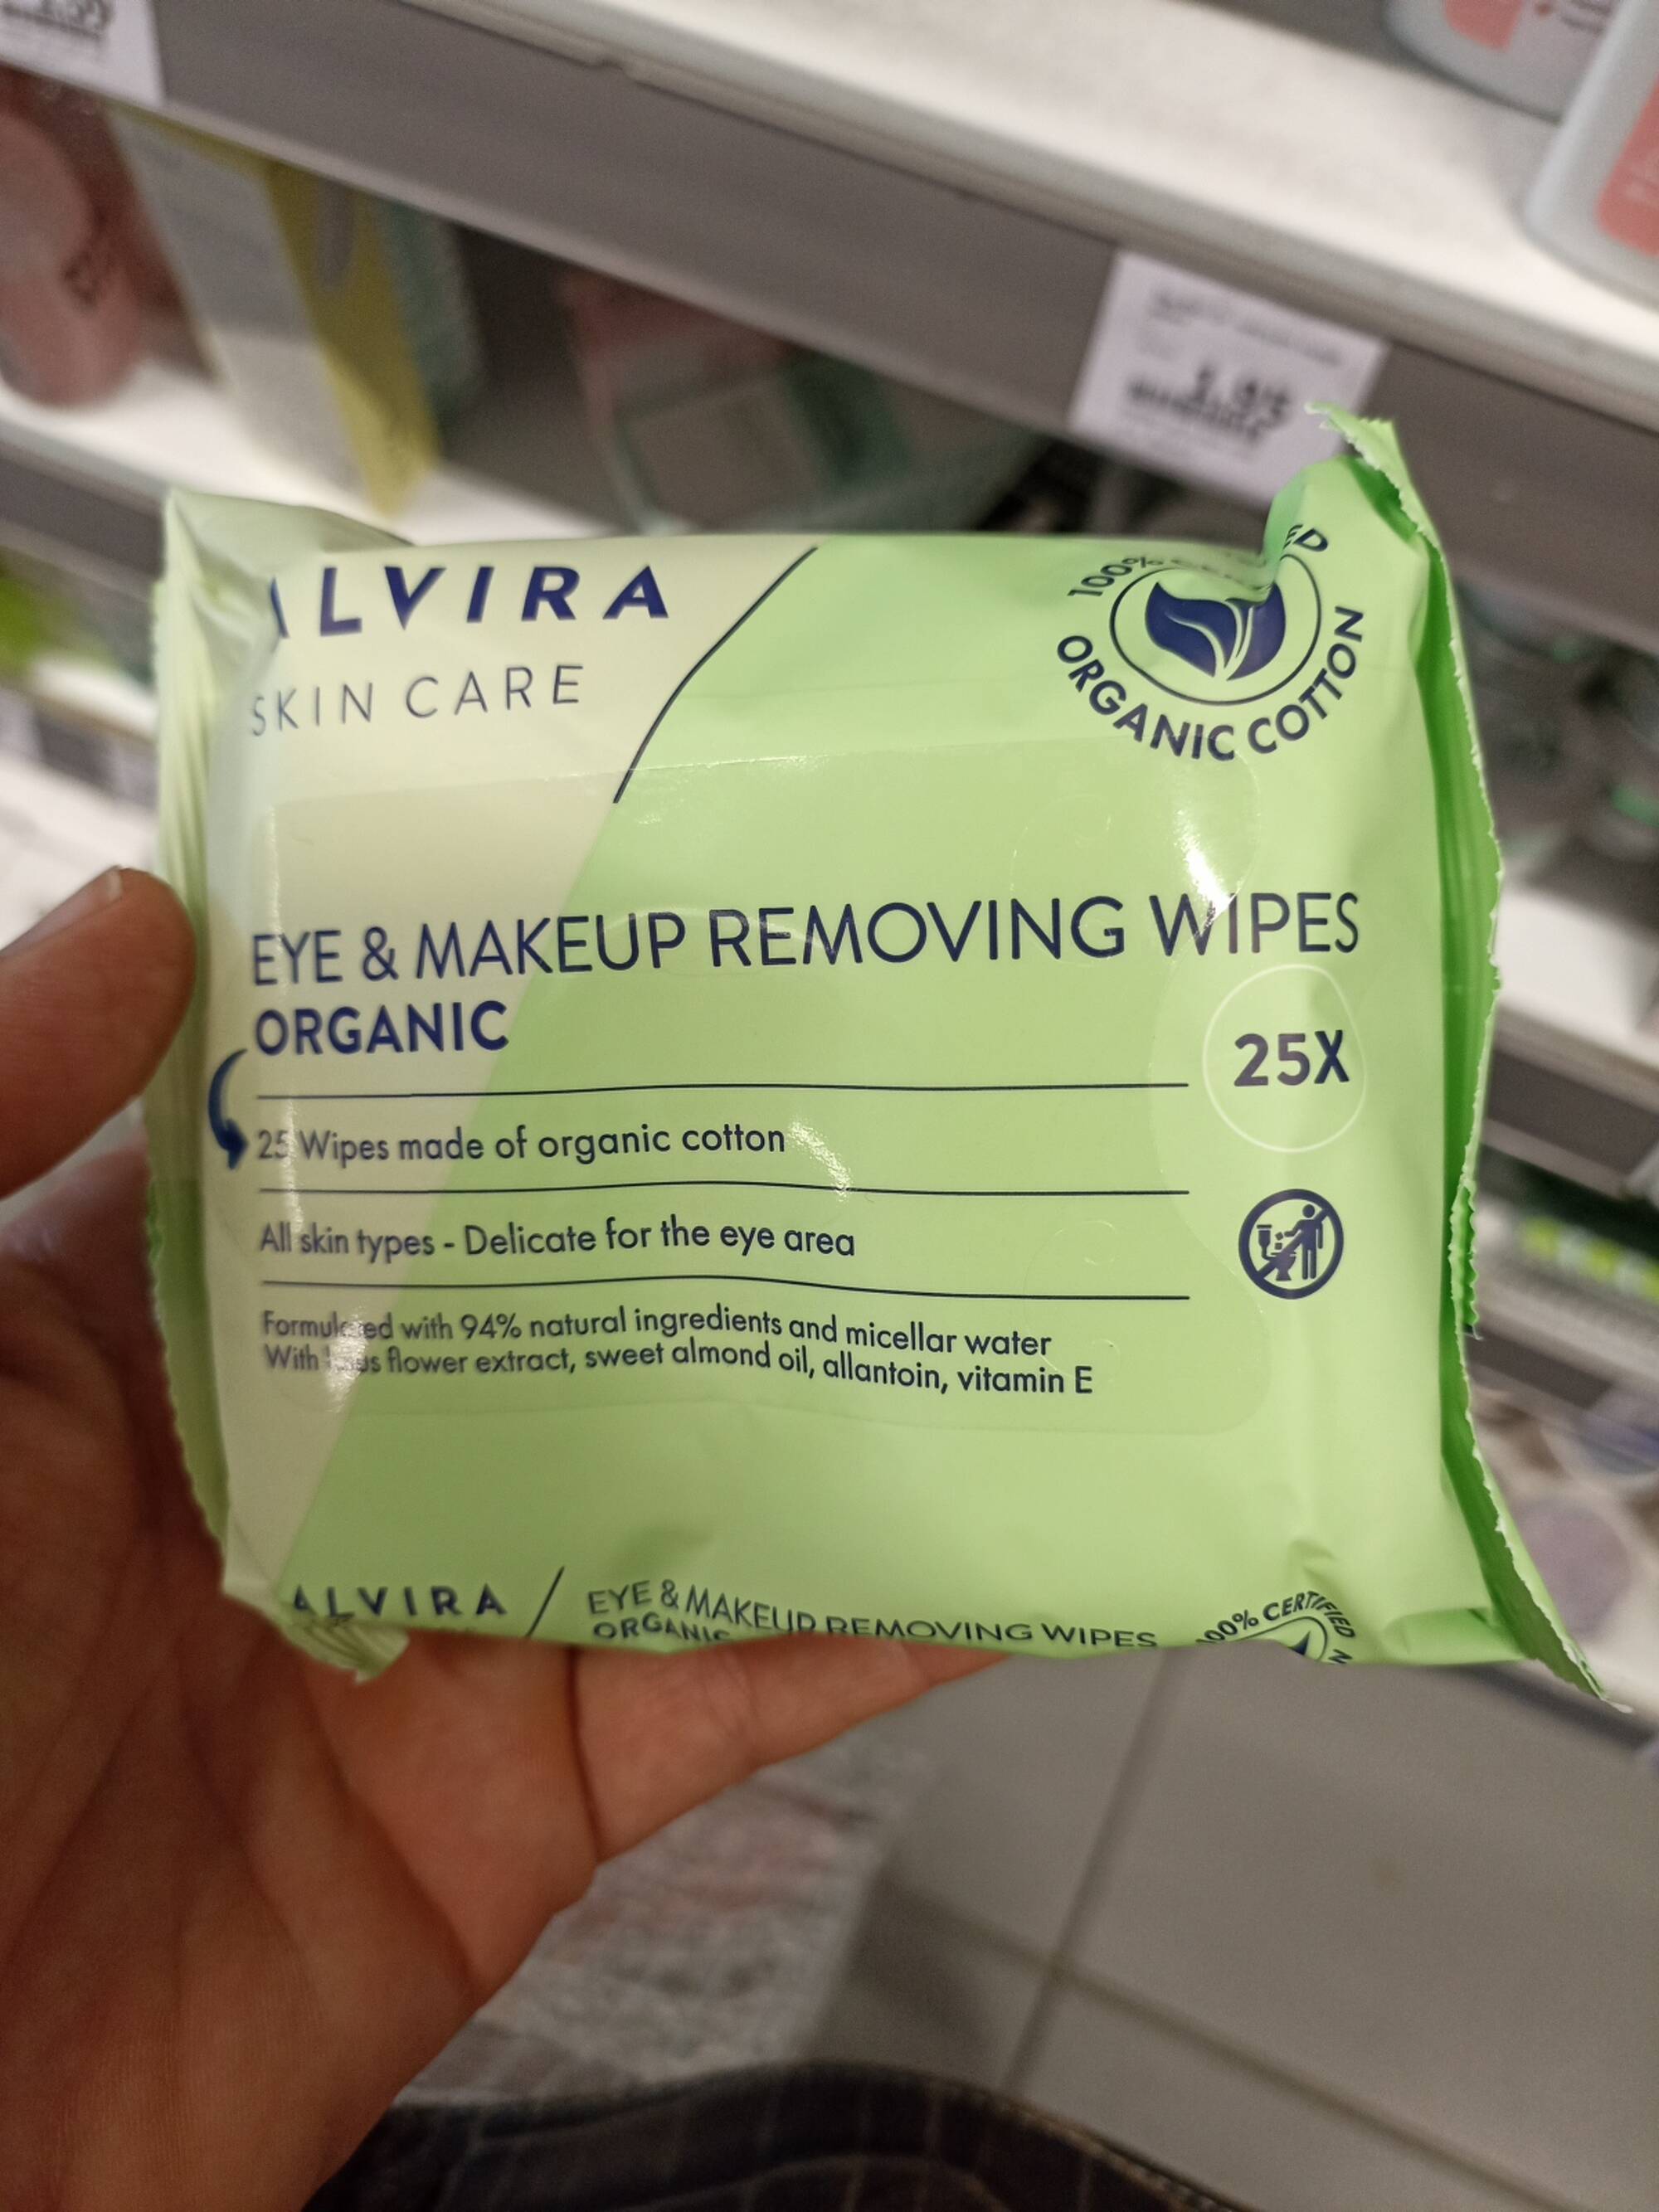 ALVIRA - Eye & make-up removing wipes